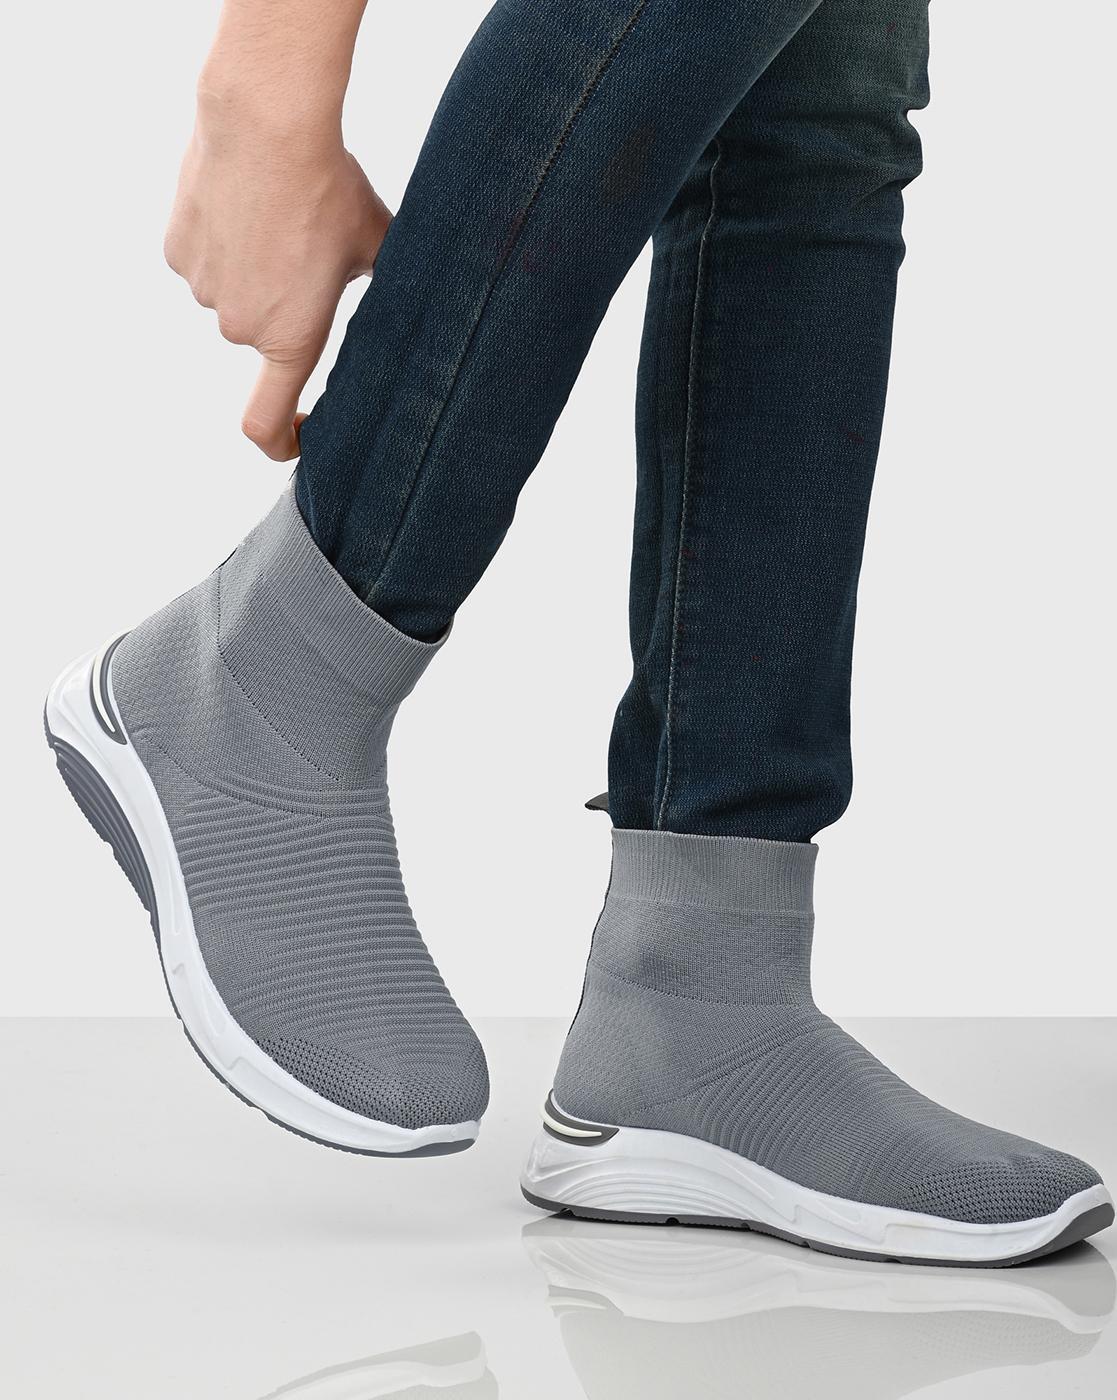 Buy Grey Shoes for Men by ARBUNORE Online |